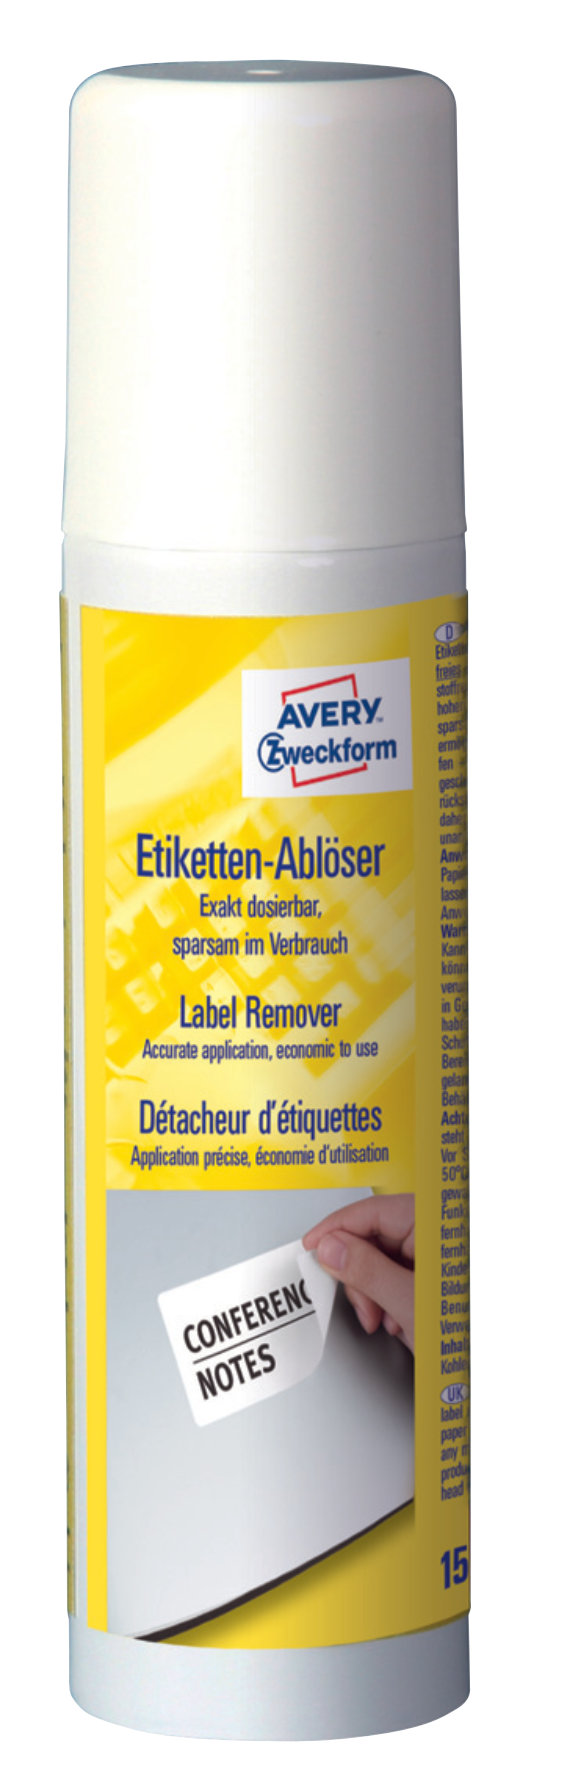 Avery Zweckform 3590 Etiketten-Ablöser, 150 ml, 1, Stück, transparent